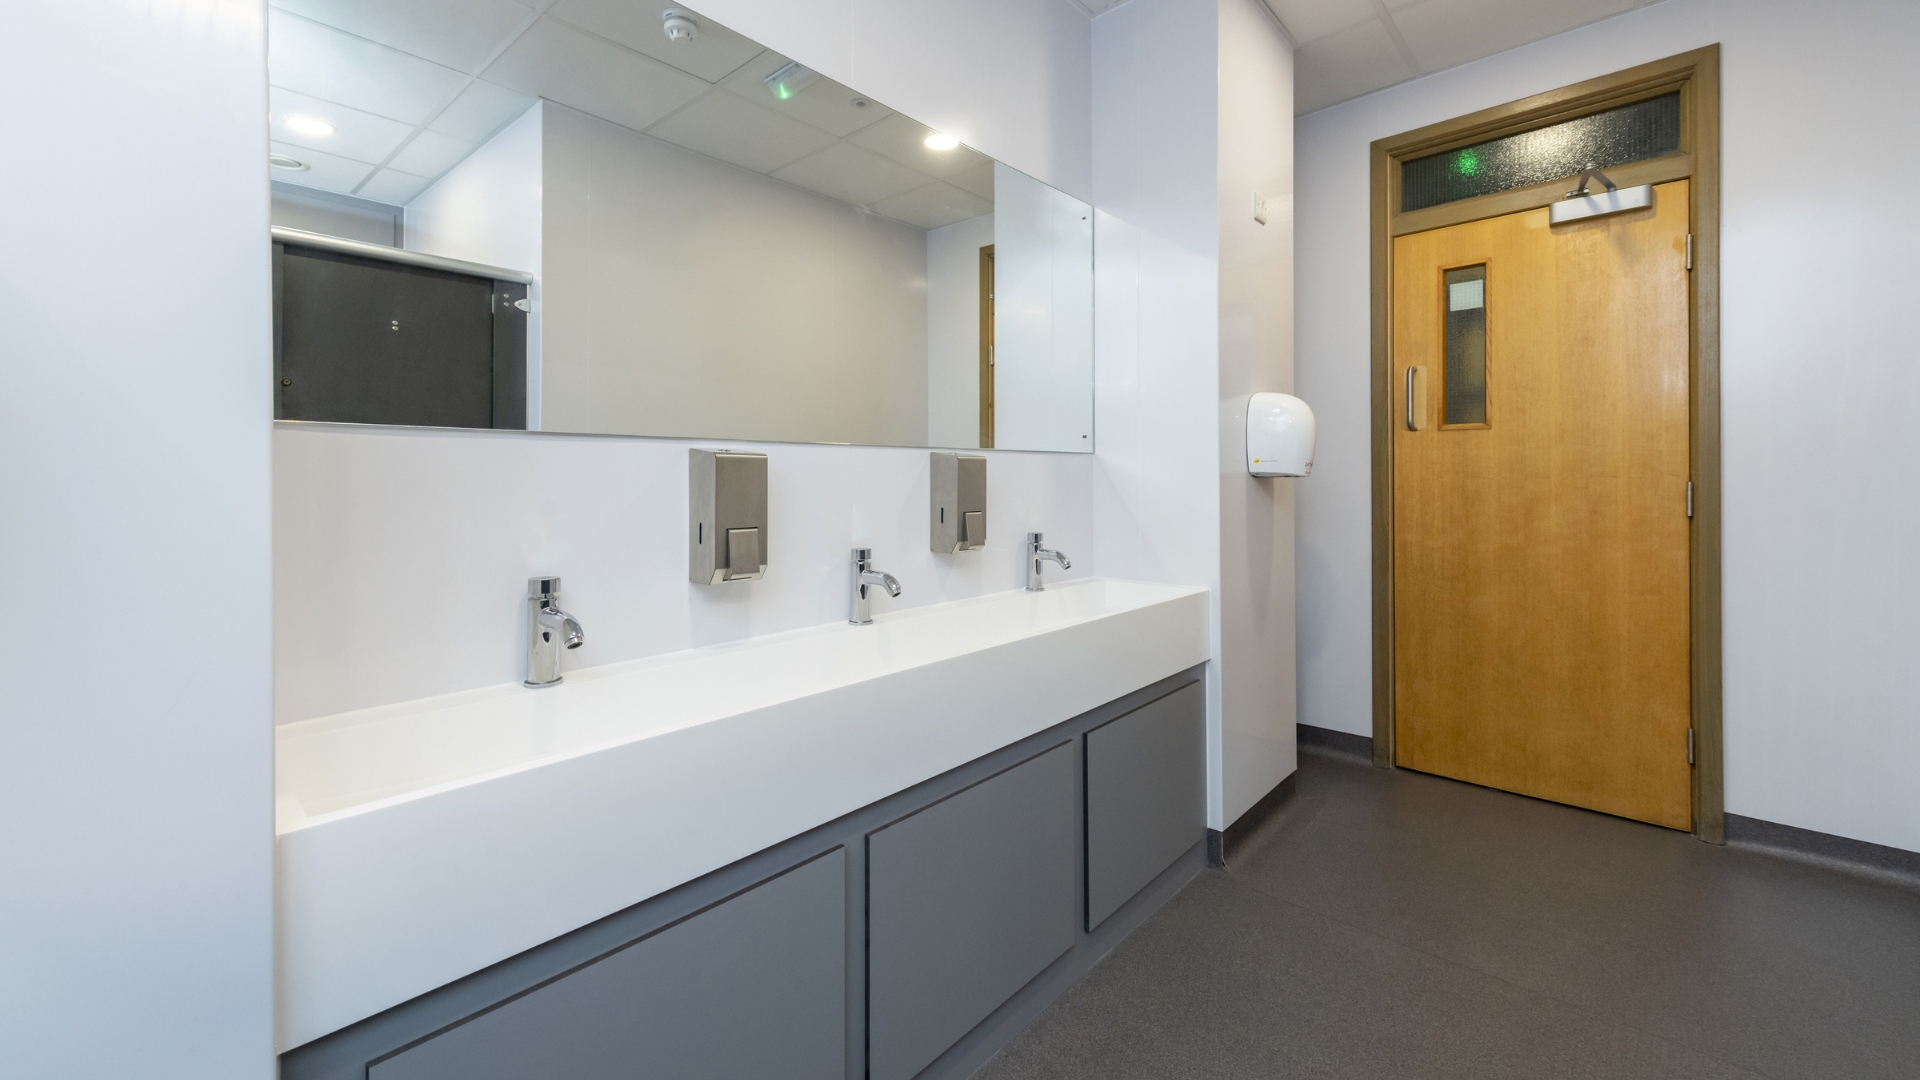 Washroom Fit-Out Company Urmston Grammar School RefurbishmentProject